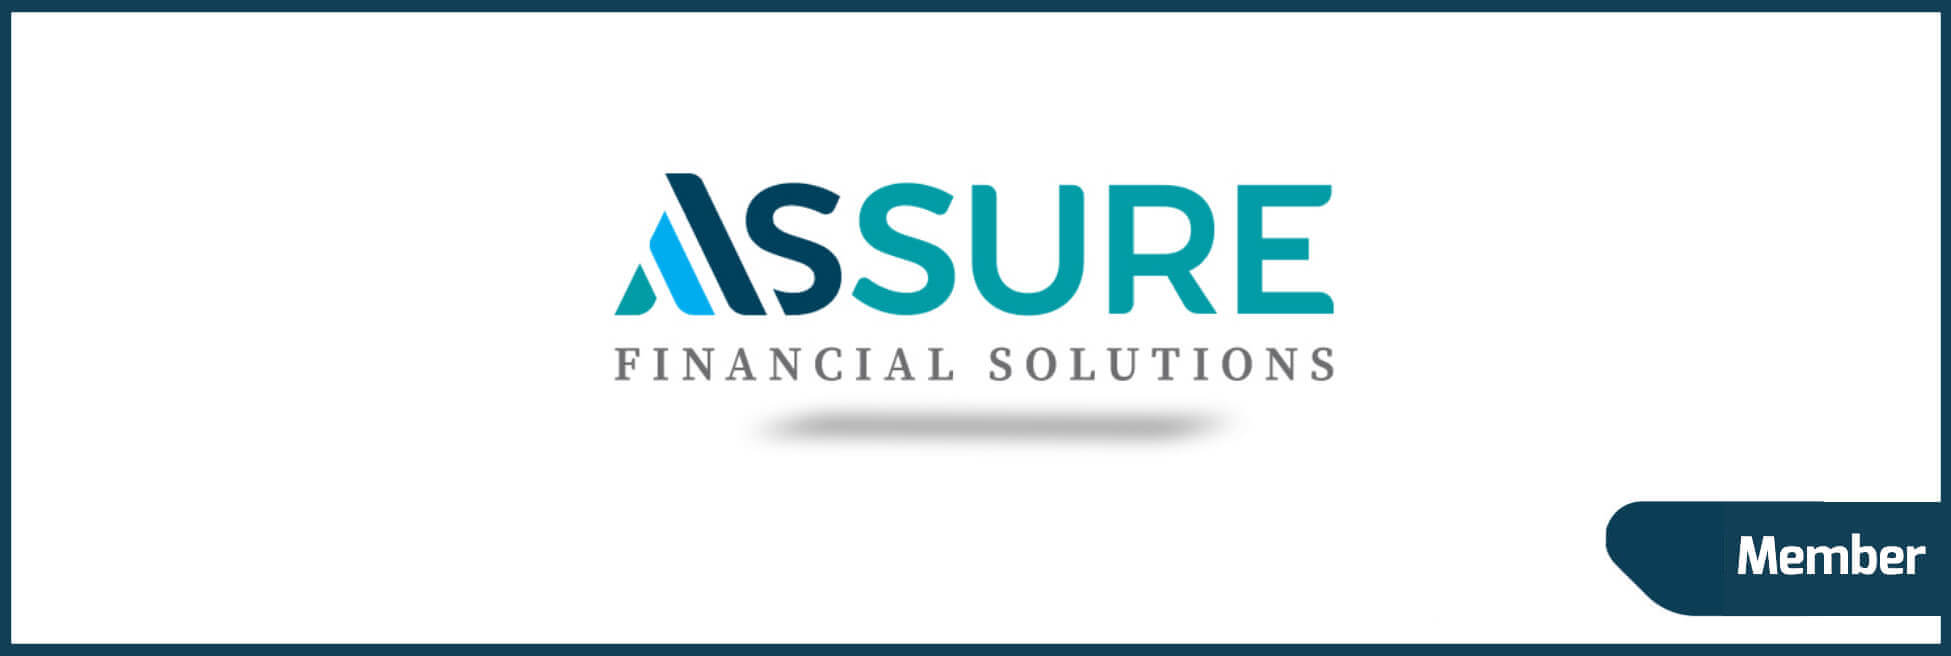 Assure Financial Solutions